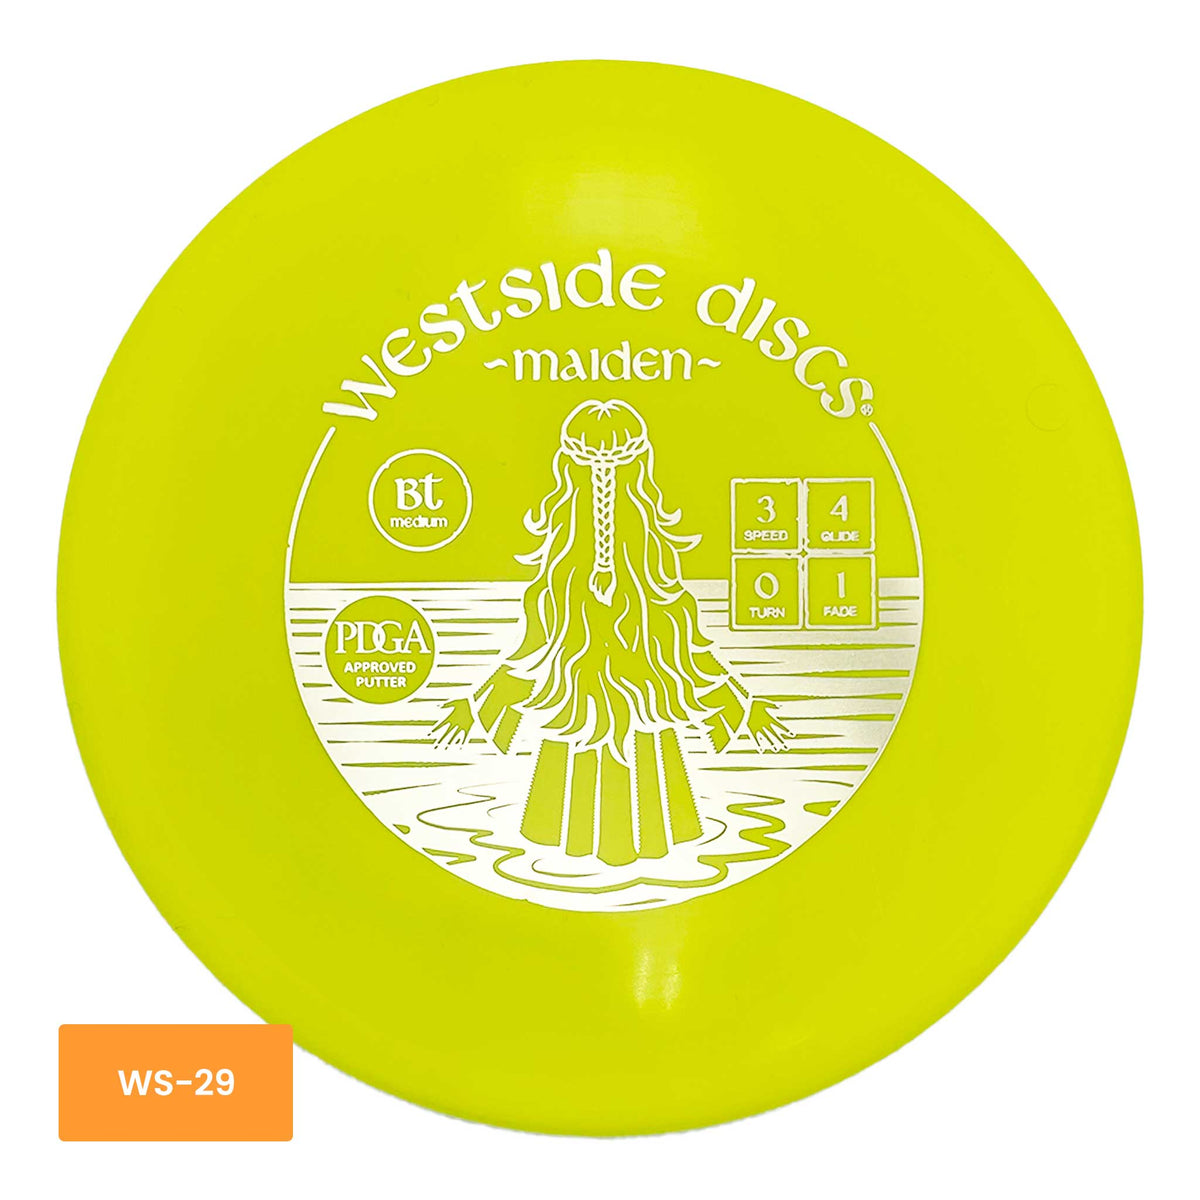 Westside Discs BT Medium Maiden putter and approach - Yellow